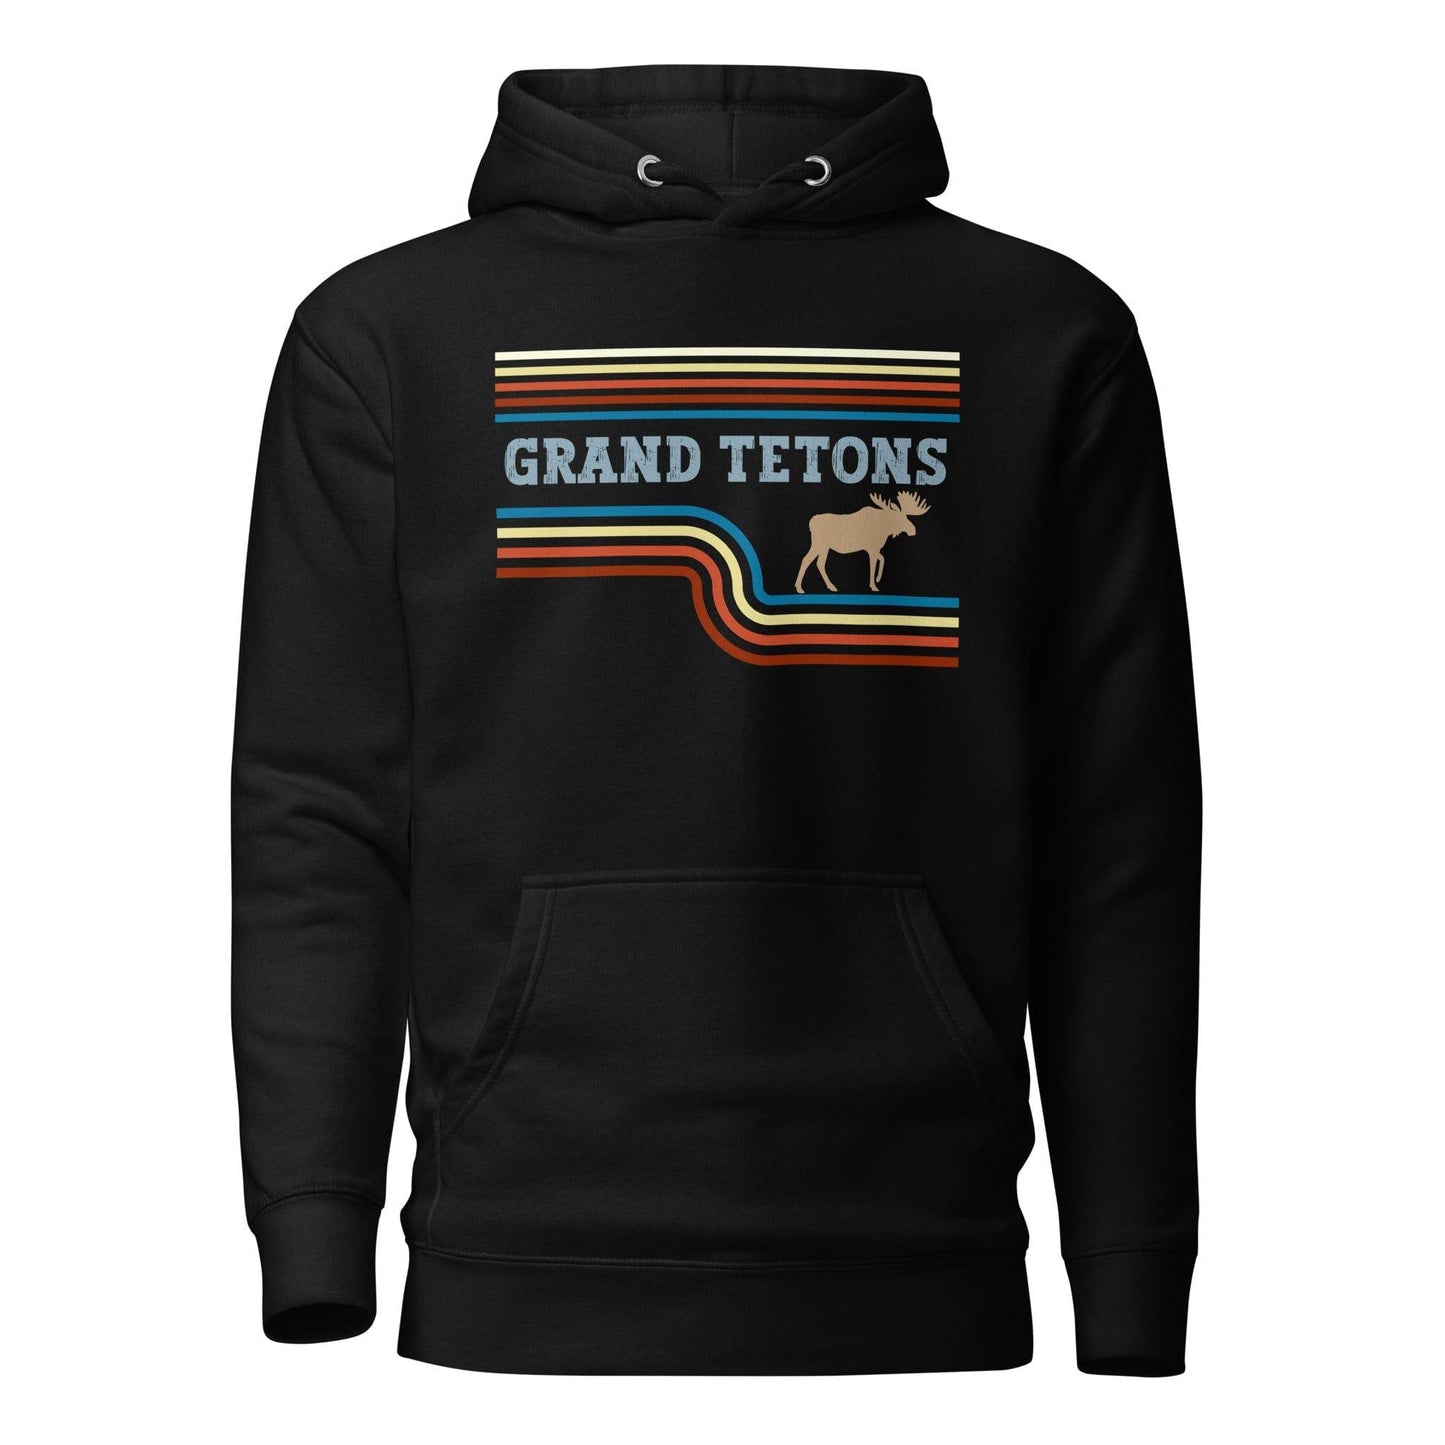 Grand Tetons Hoodie - Adventure Threads Company